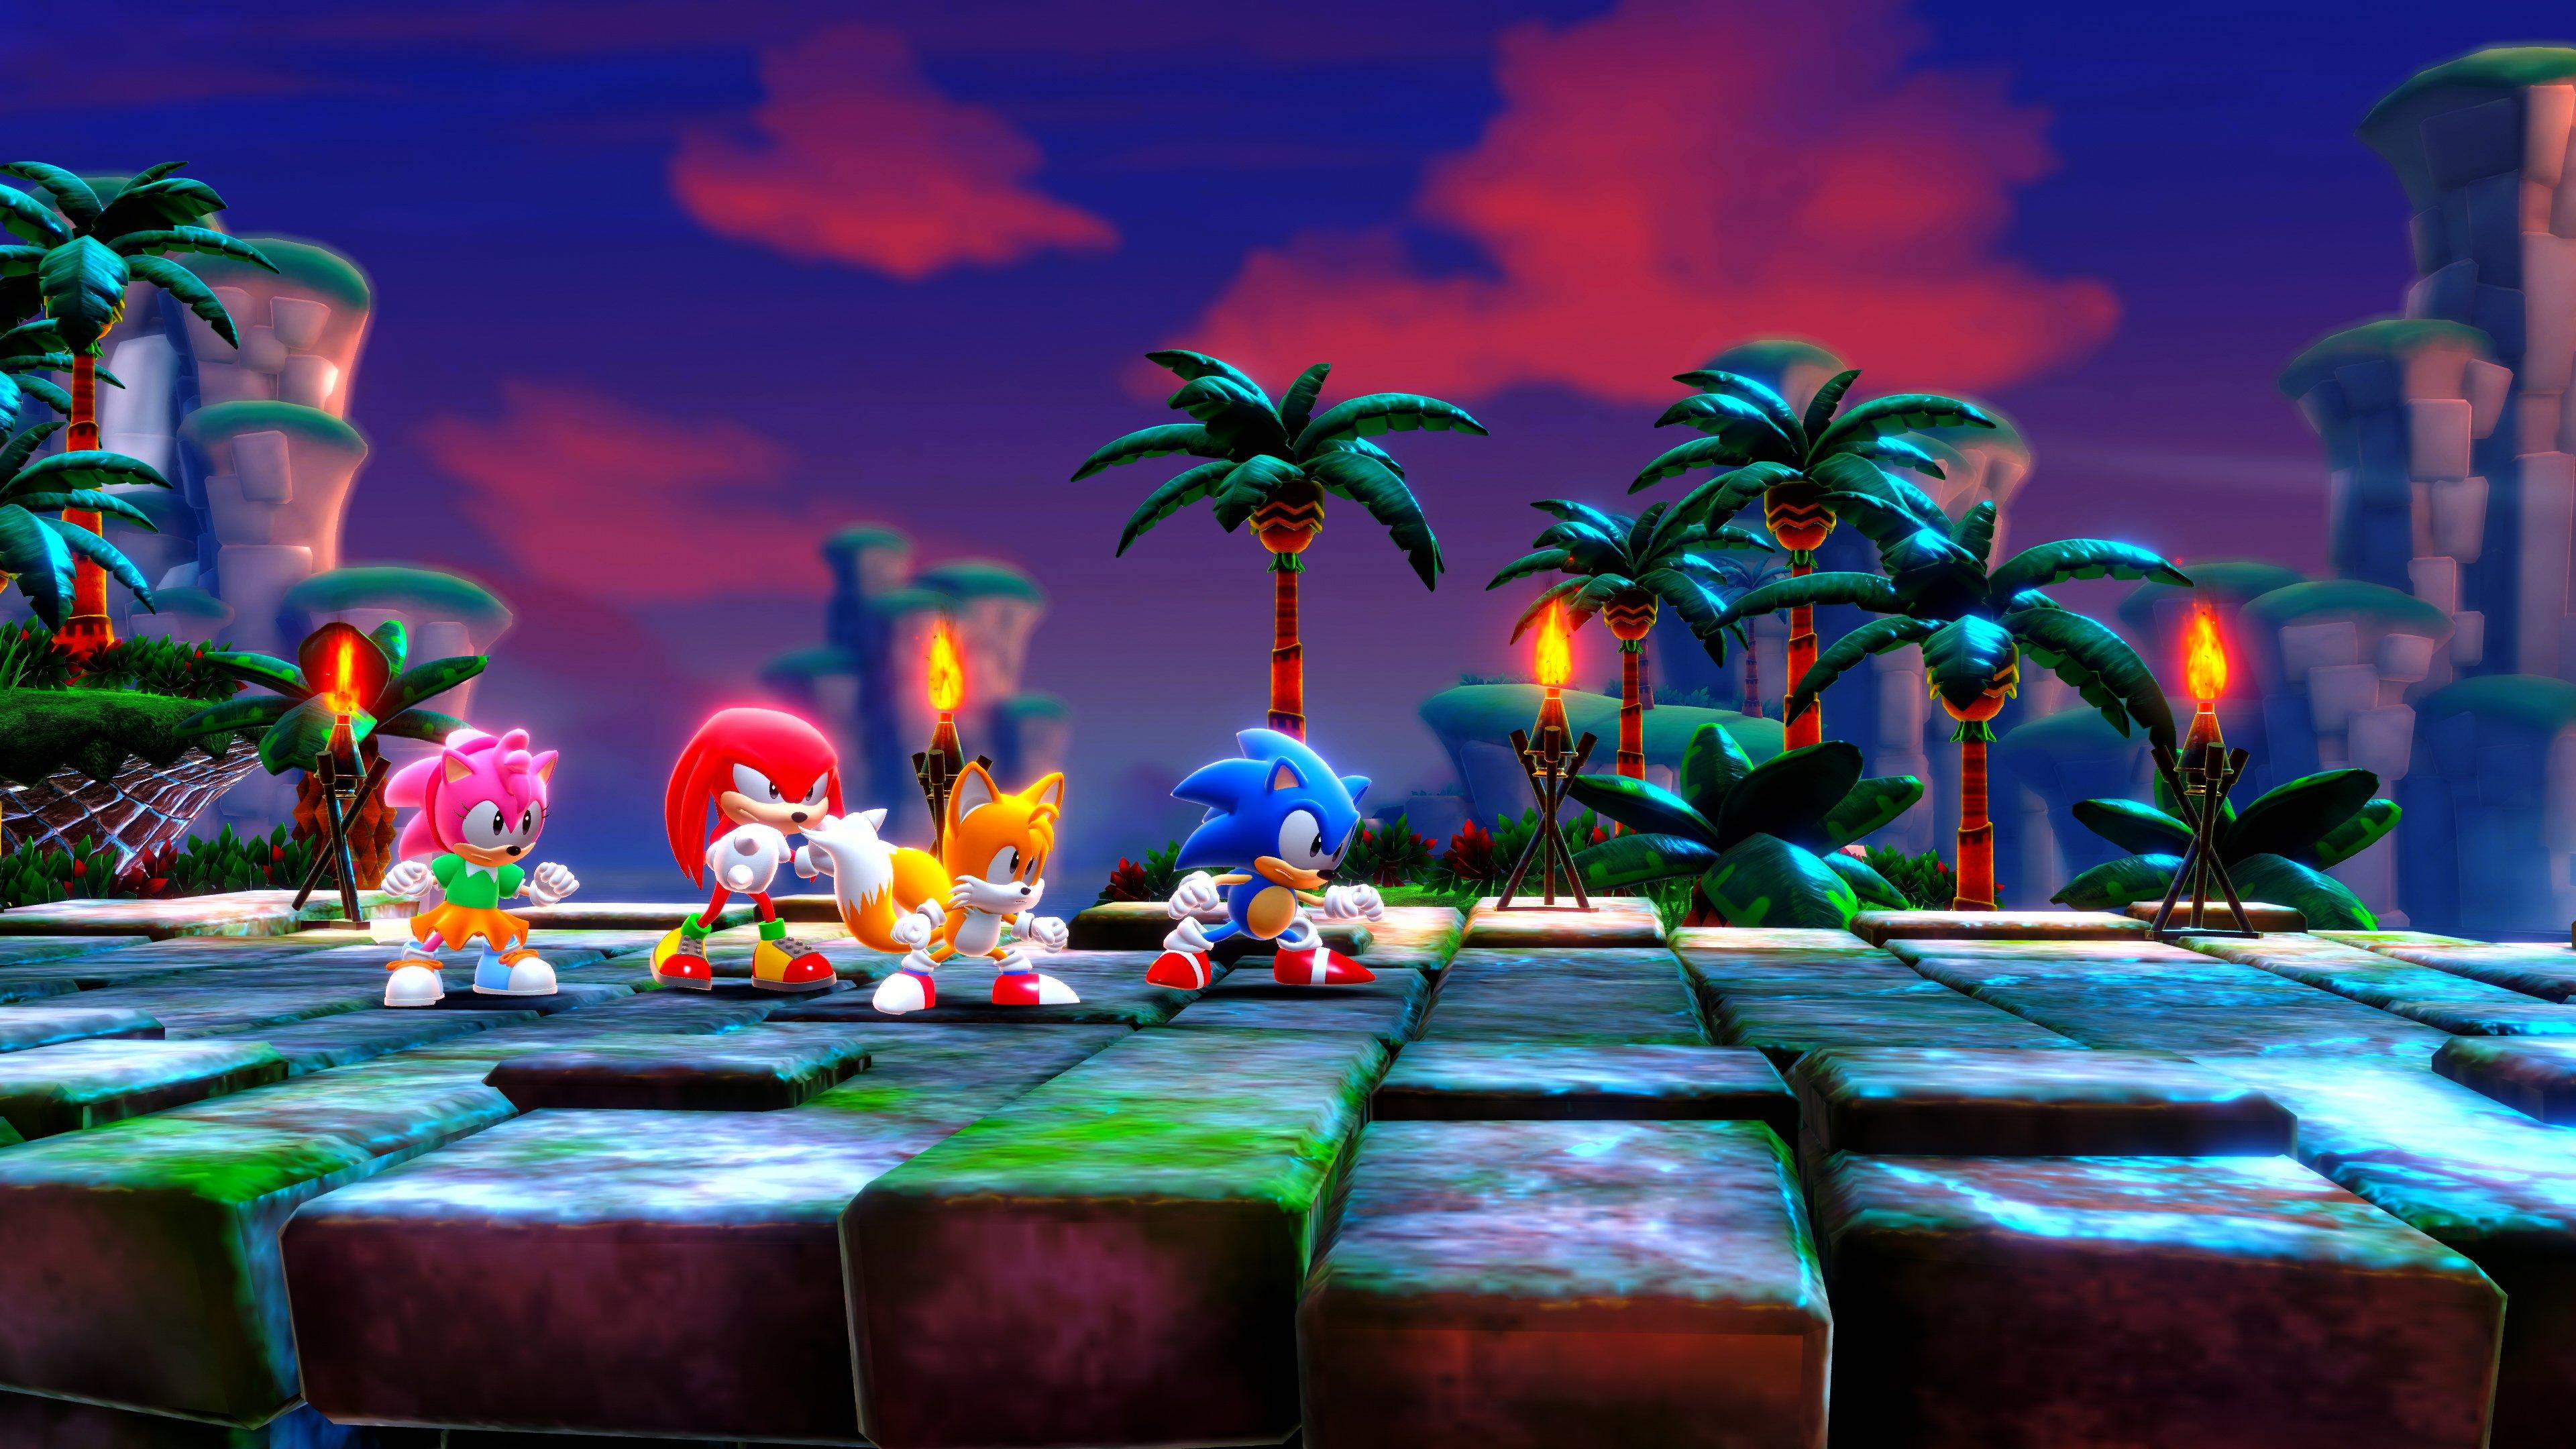 Sonic terá skin de LEGO em jogo Sonic Superstars •